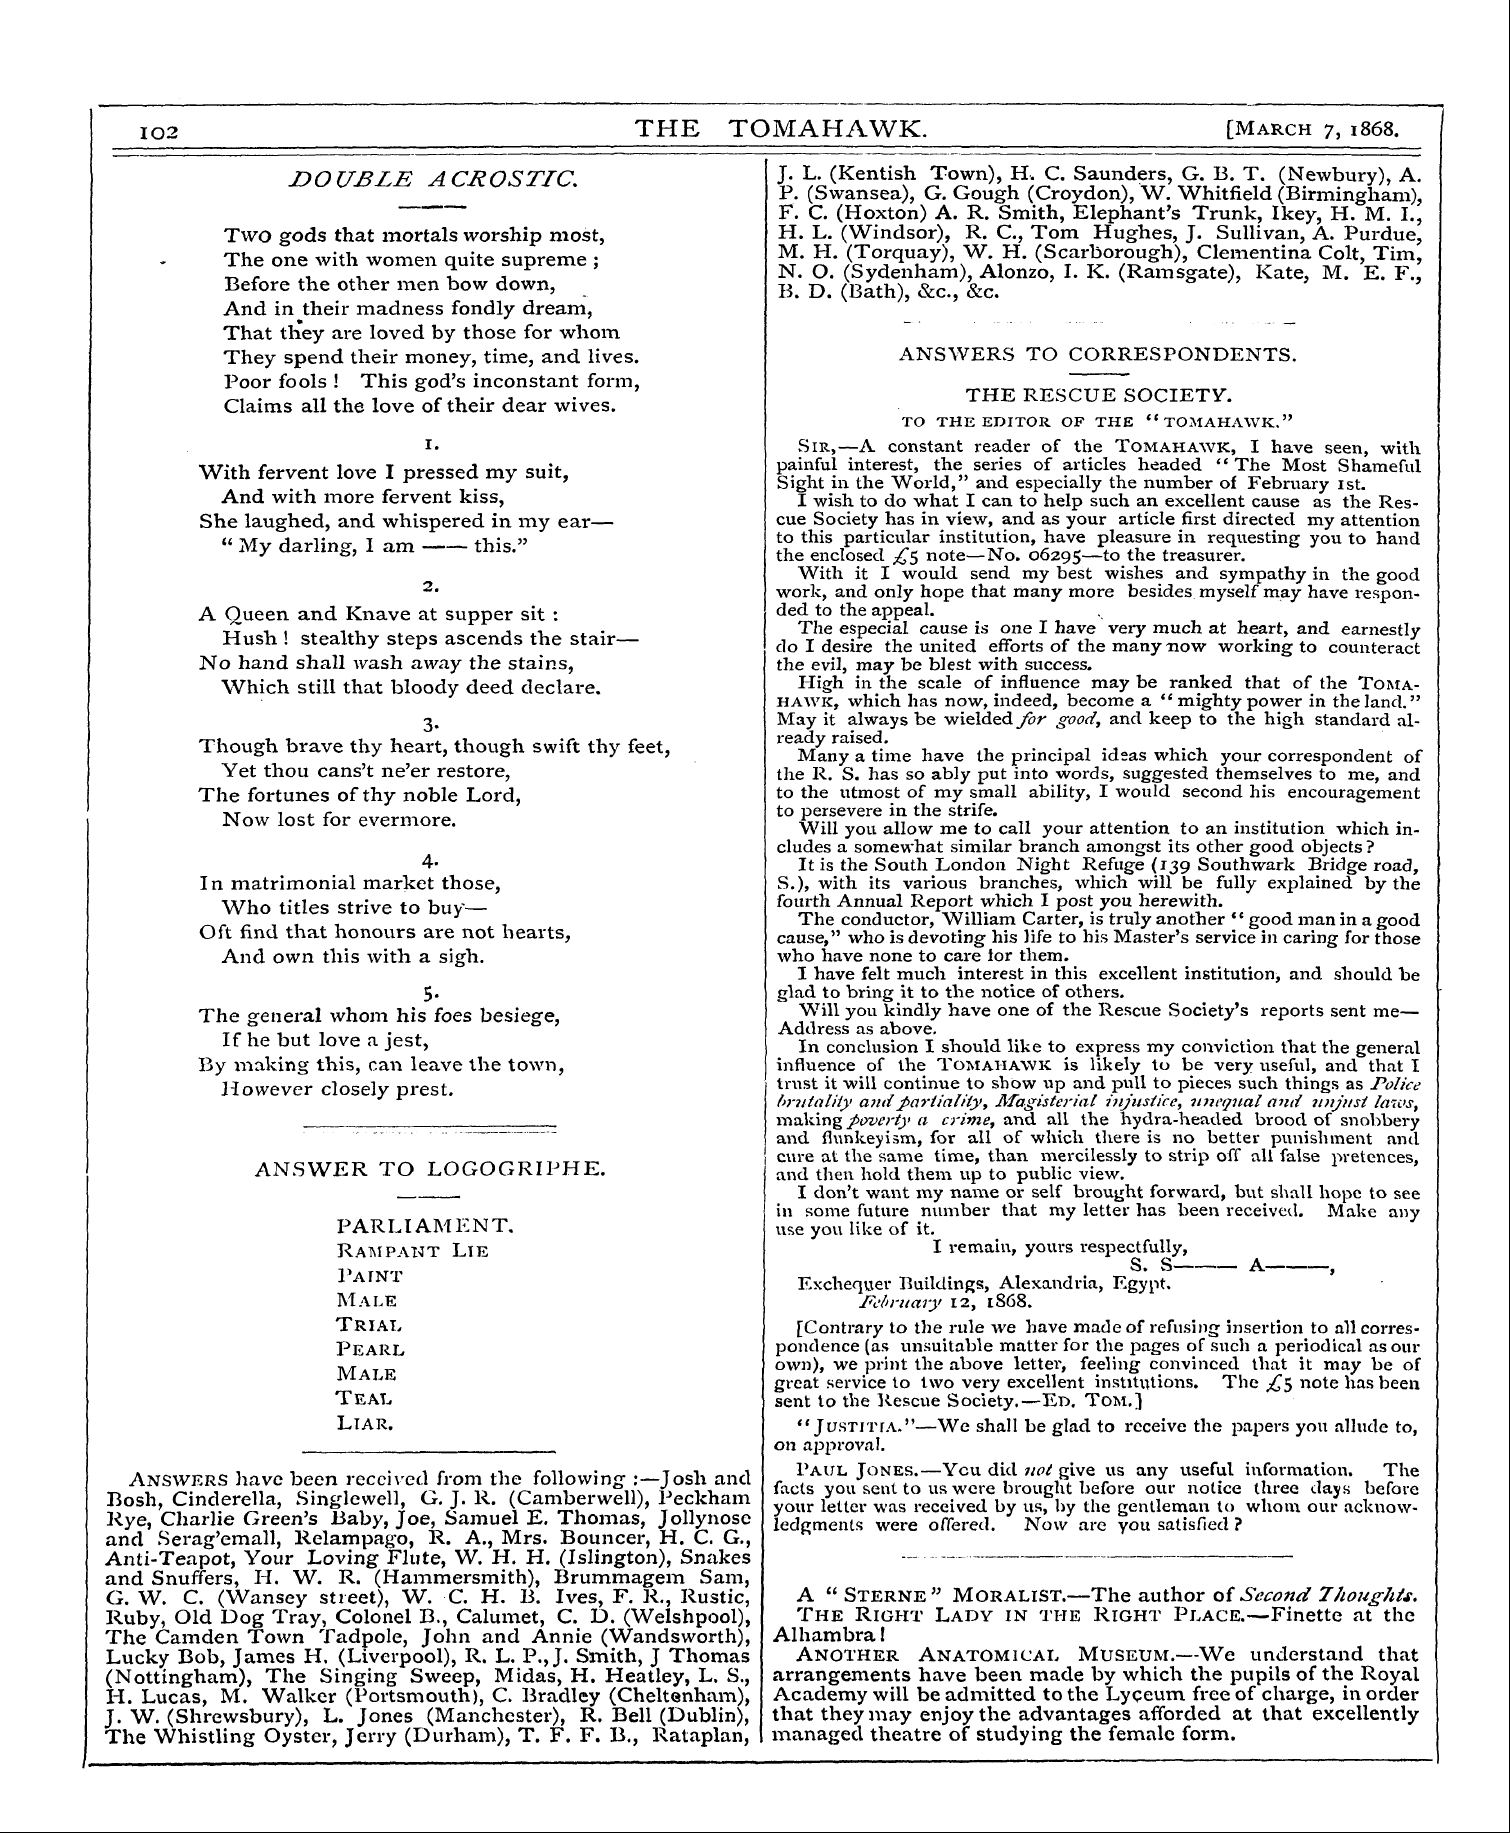 Tomahawk (1867-1870): jS F Y, 1st edition - Double Acrostic,